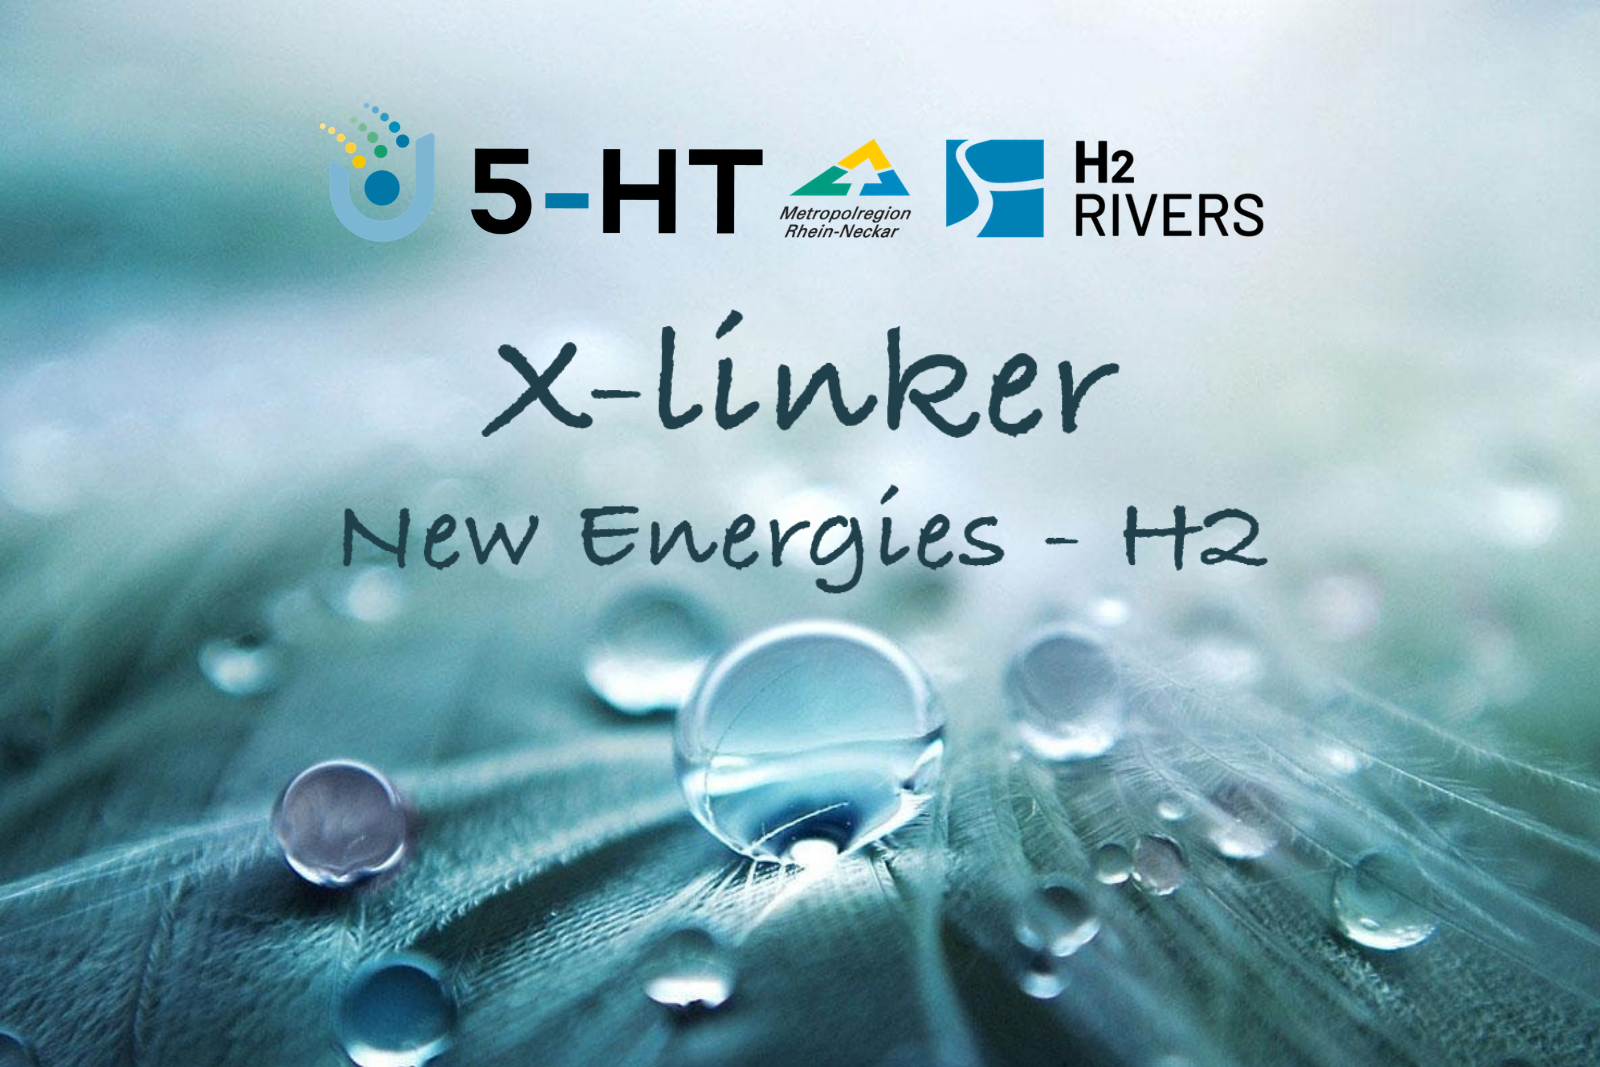 X-Linker New Energies - H2